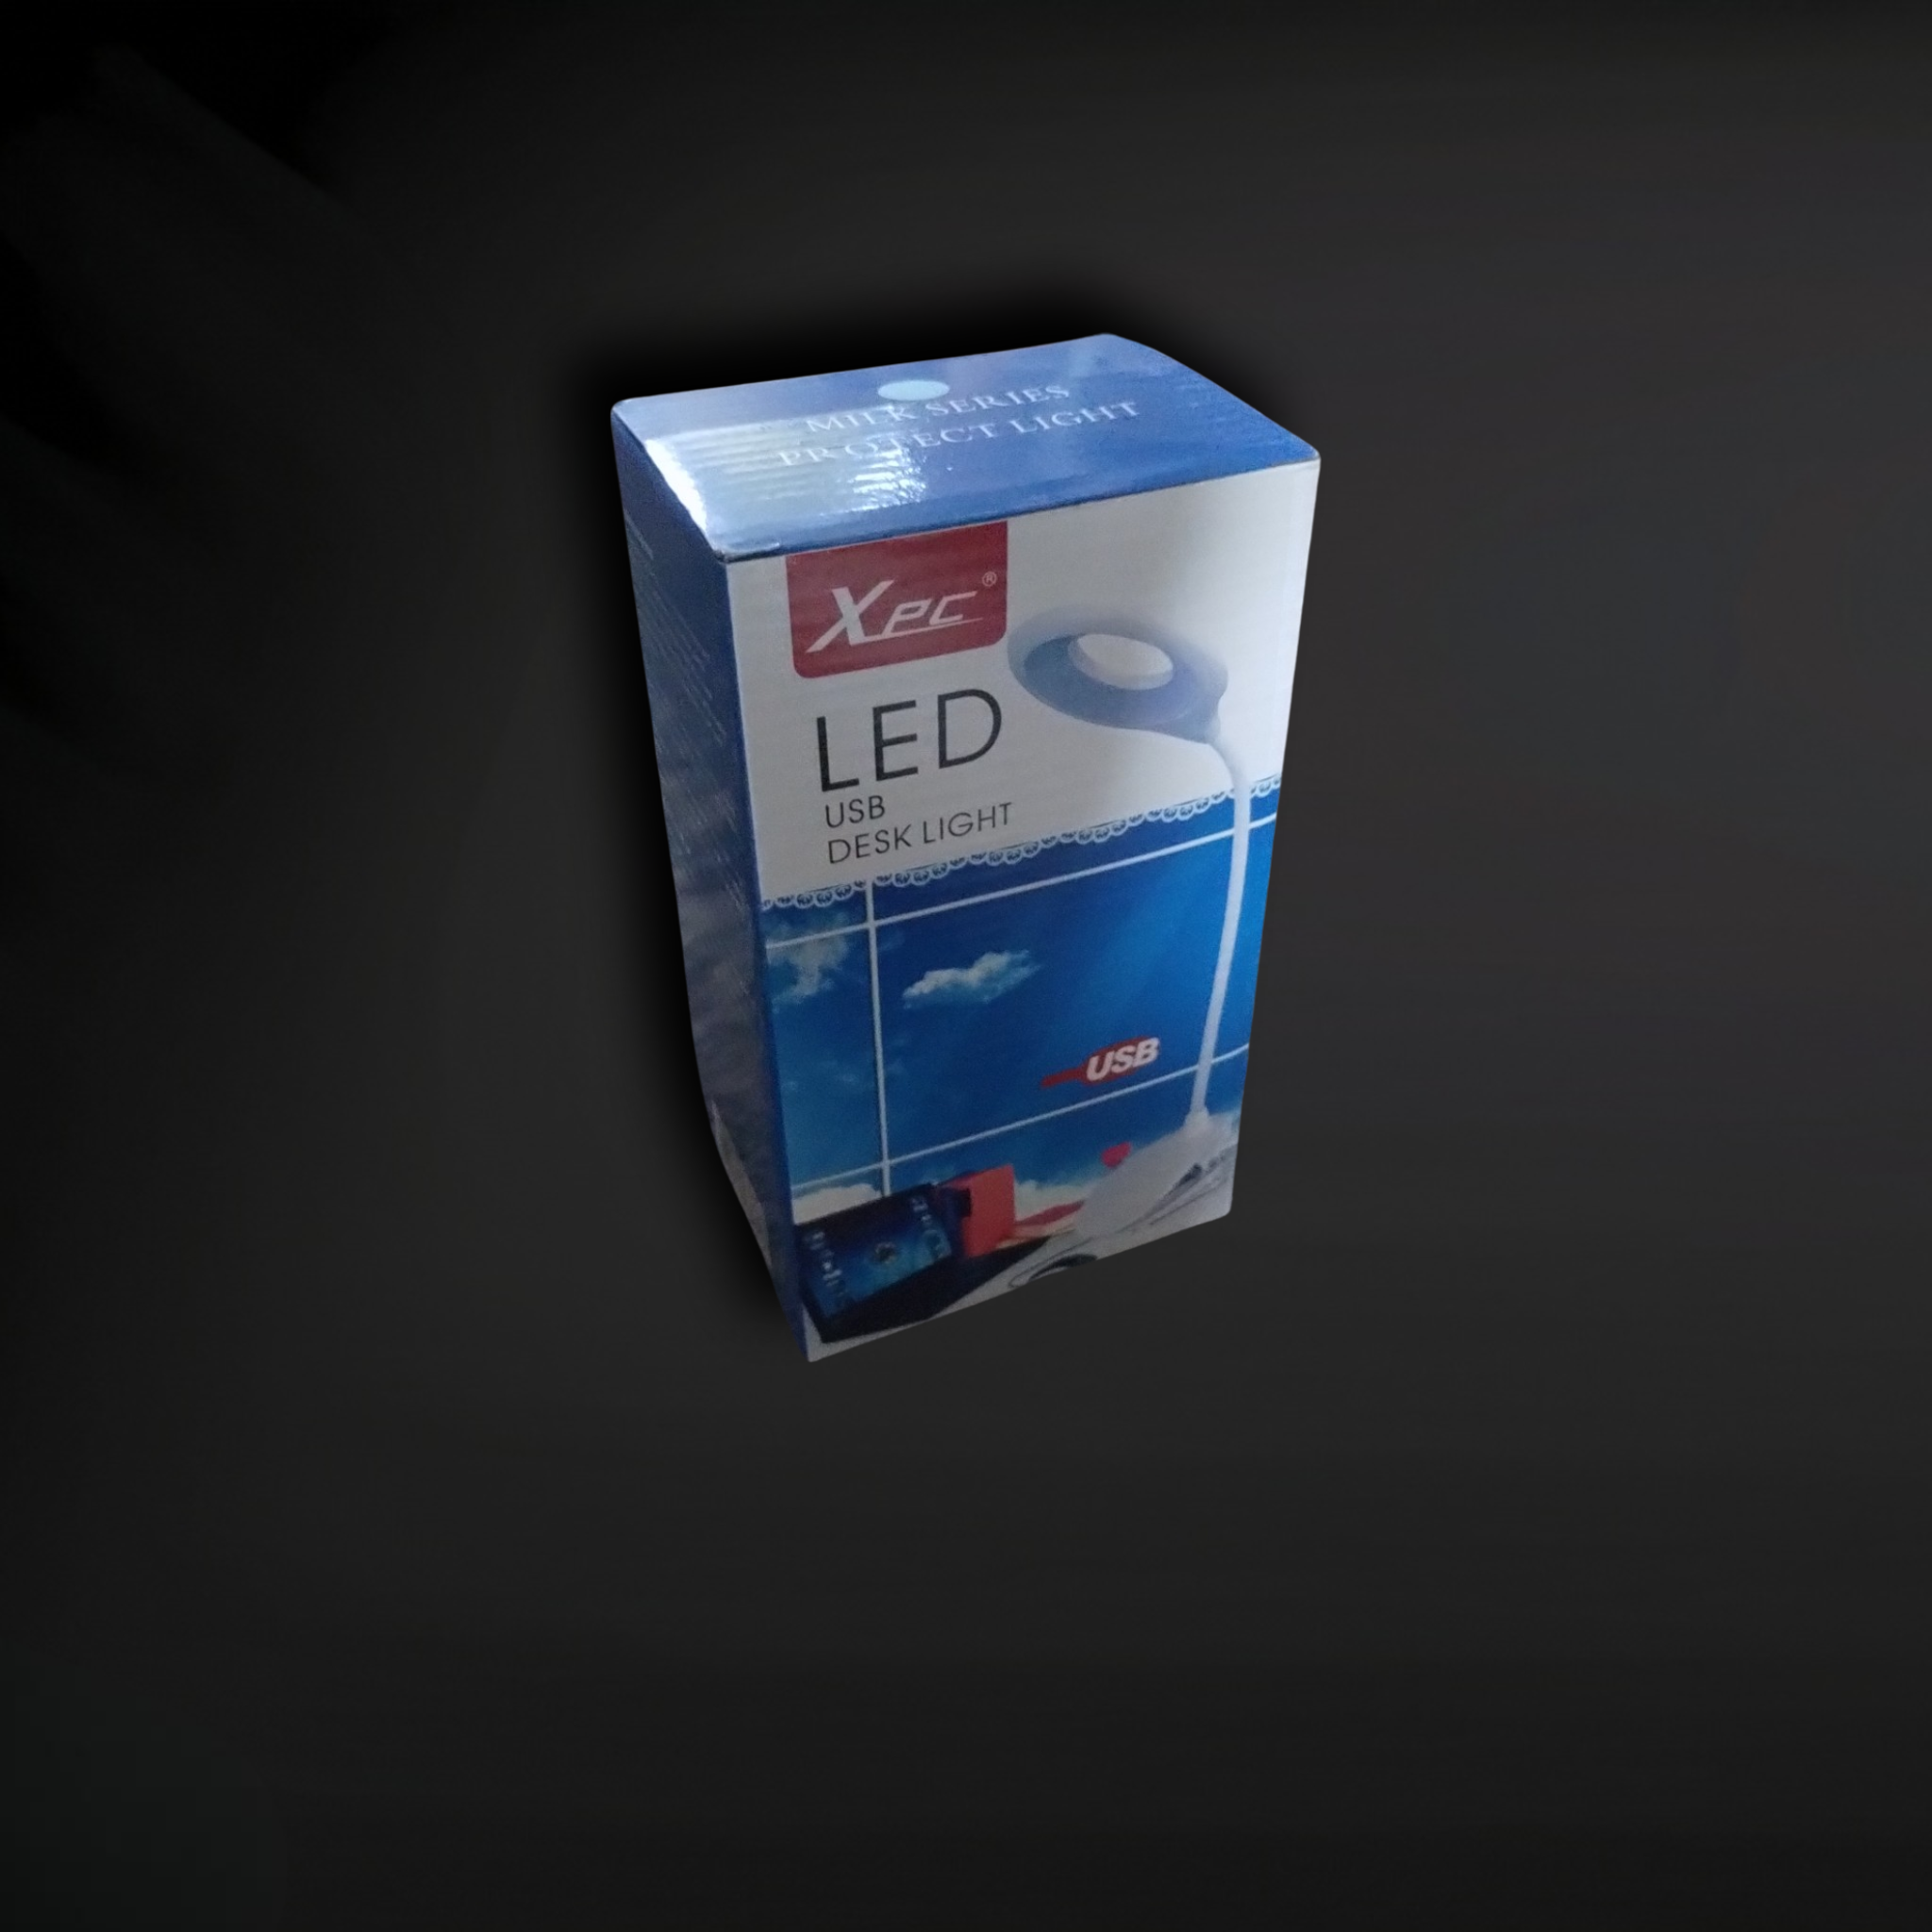 LED Desk LAMP with USB Outlet